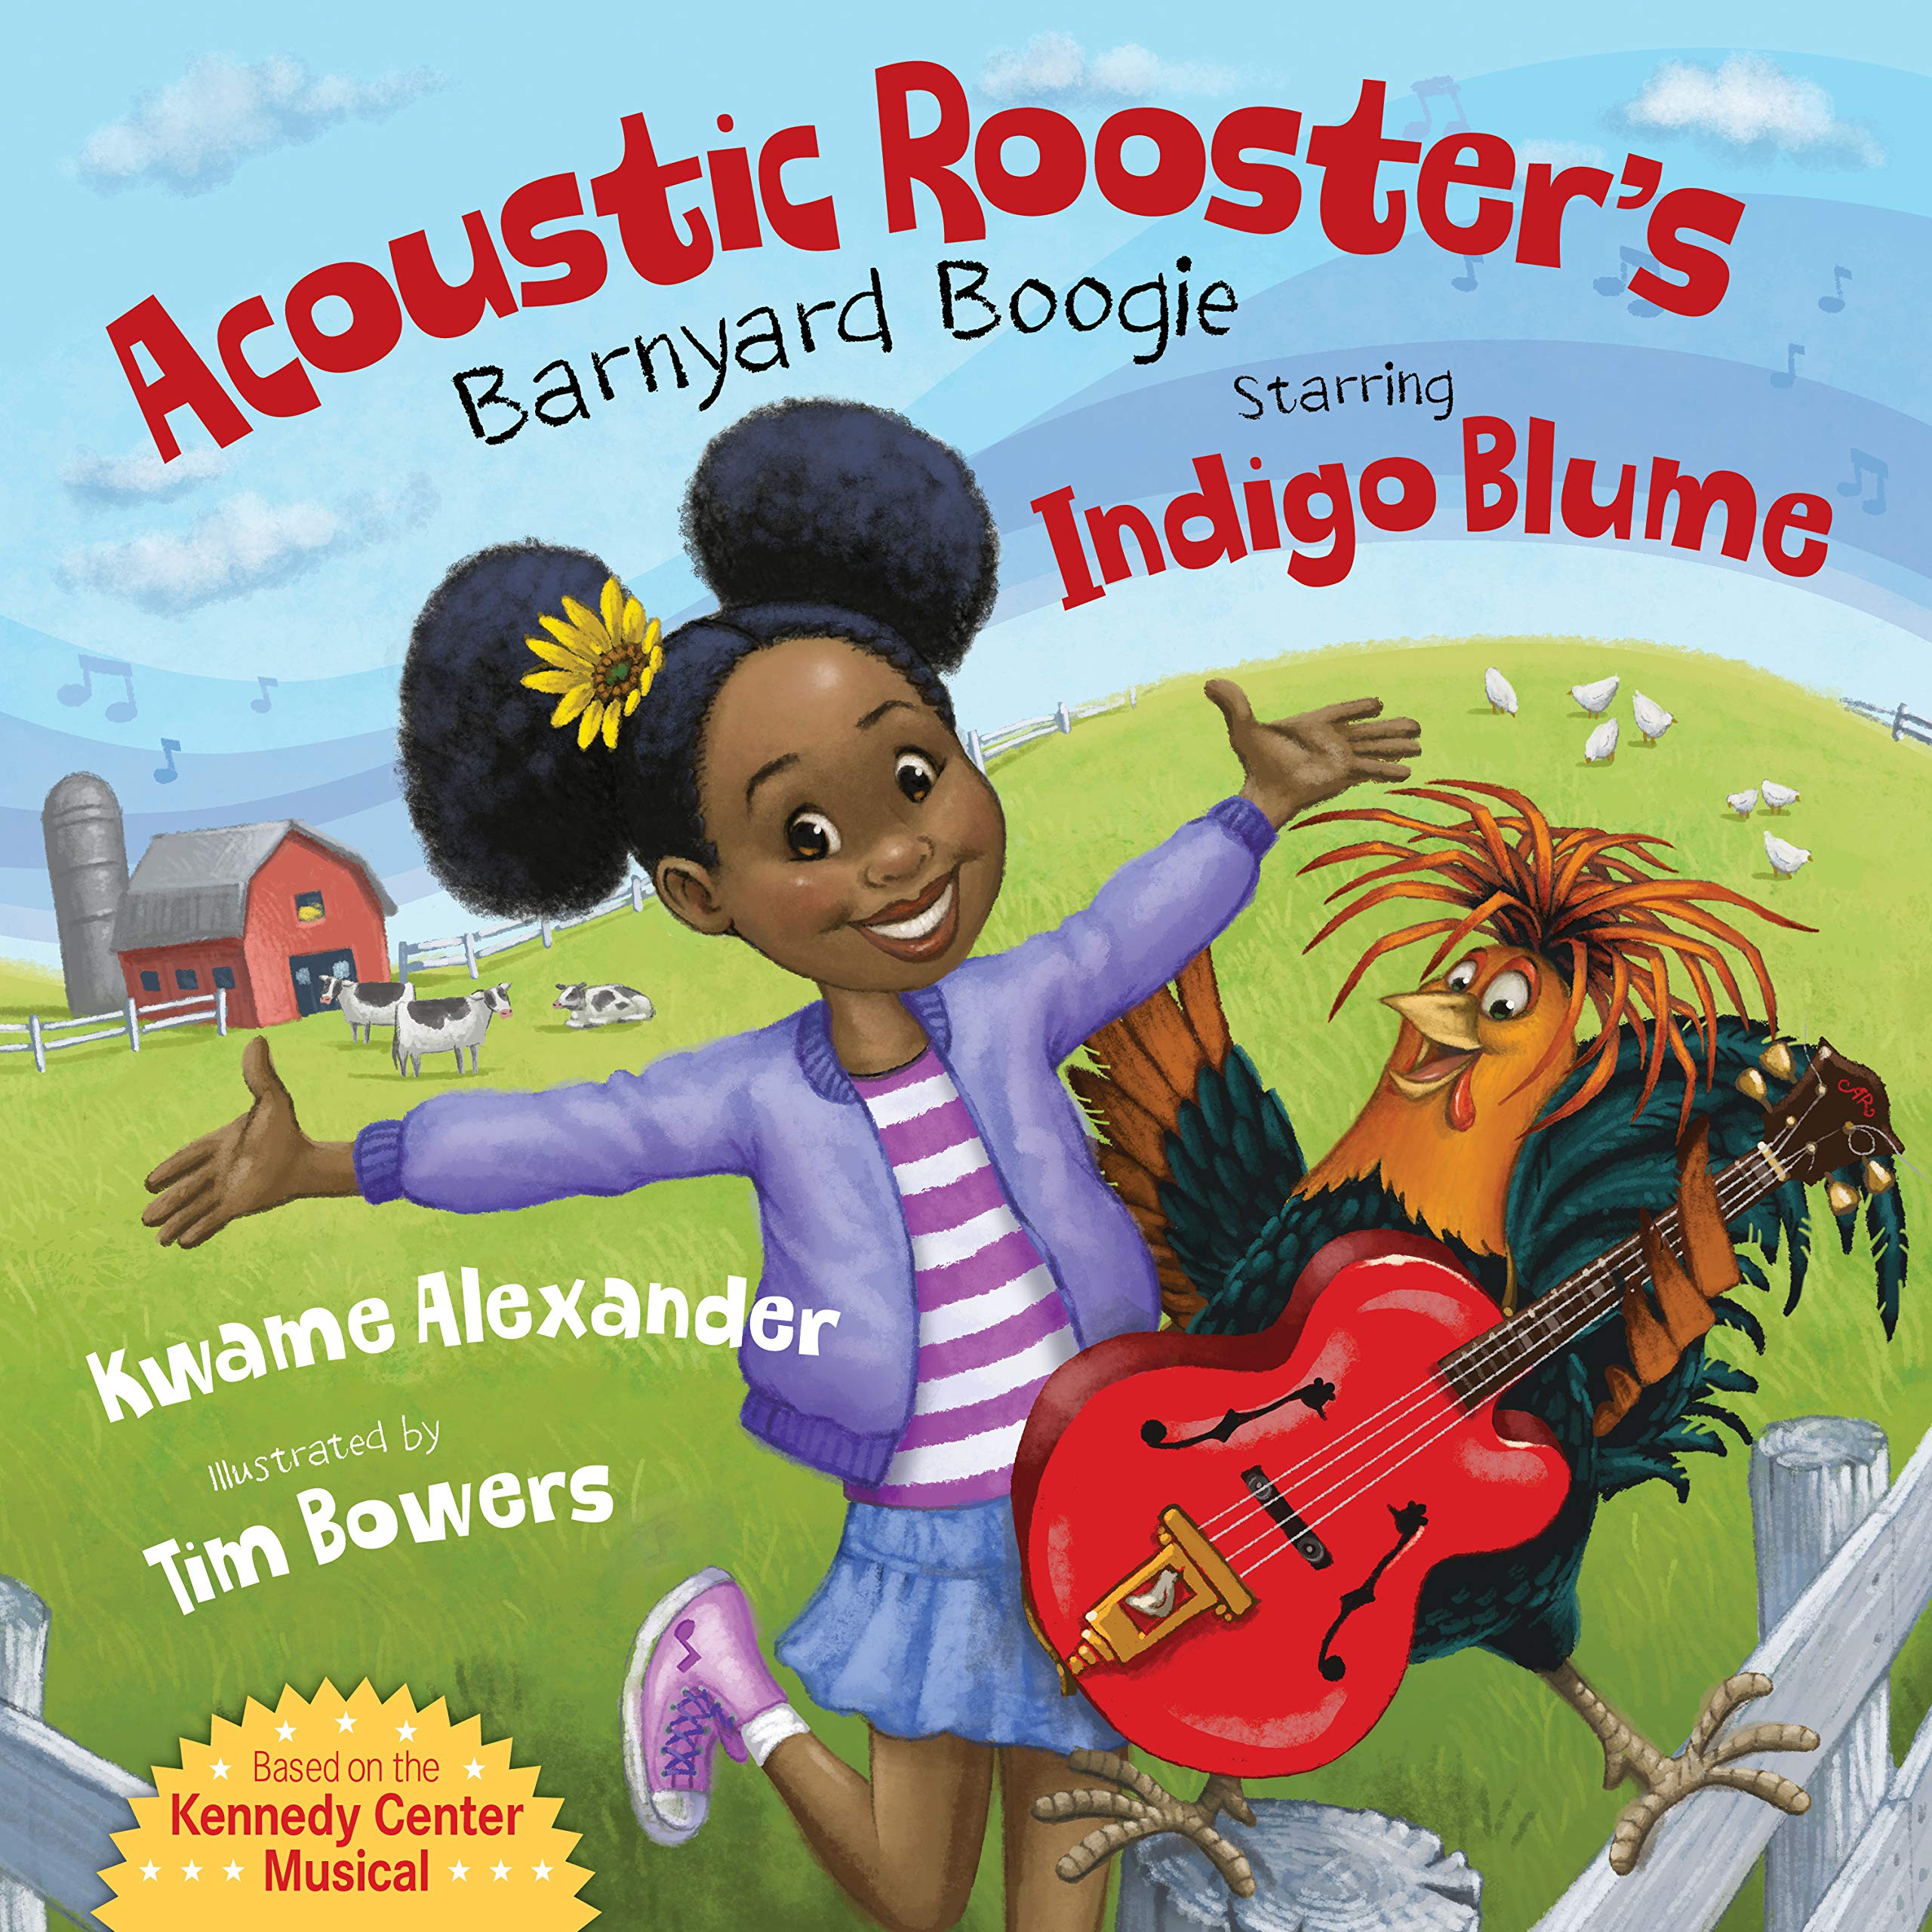 Acoustic Rooster’s Barnyard Boogie Starring Indigo Blume